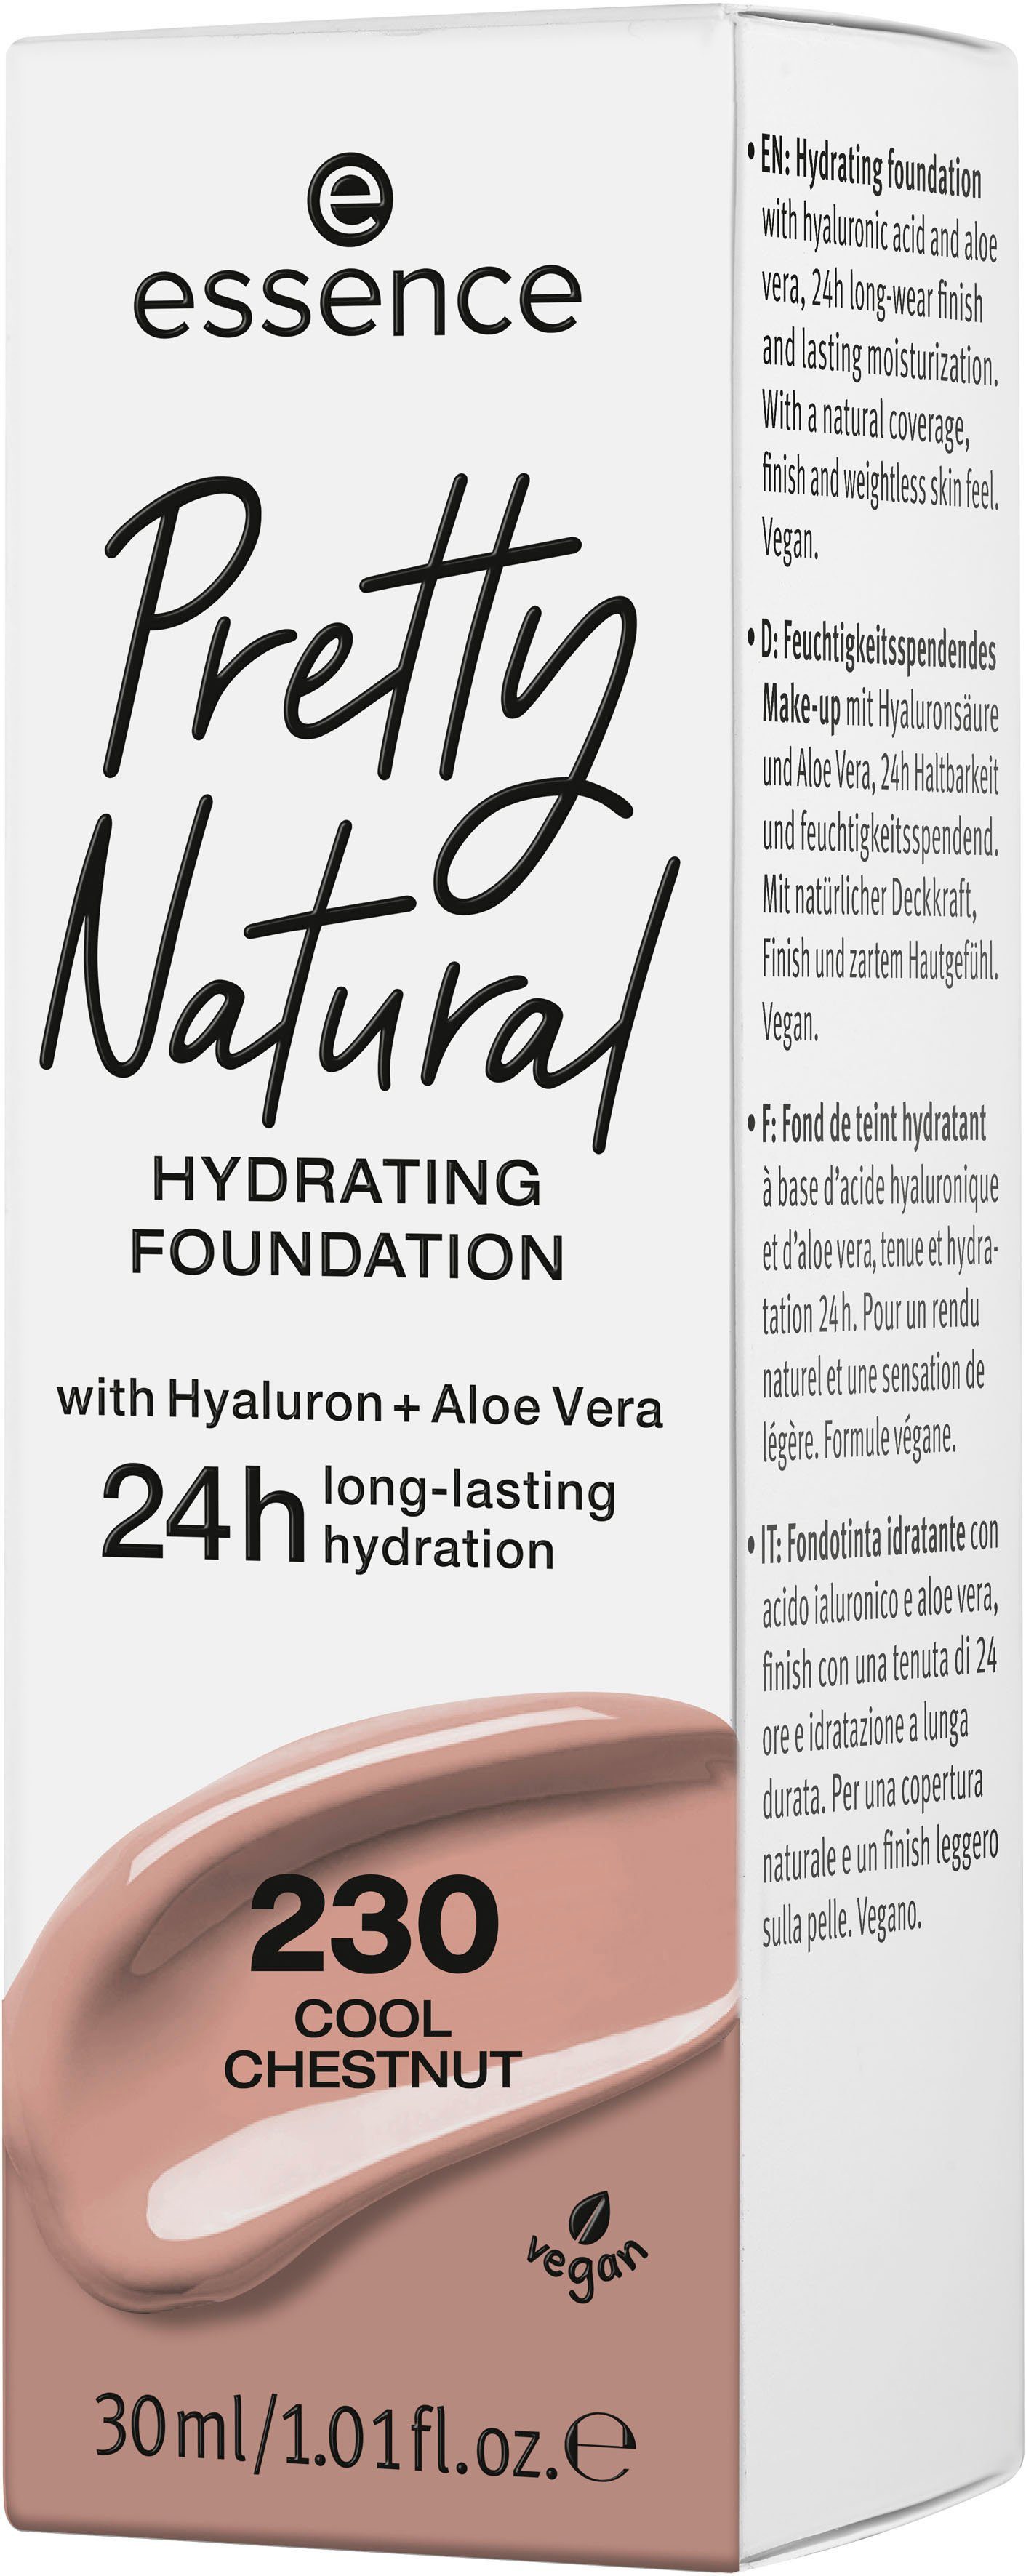 Natural 3-tlg. Cool Essence Chestnut HYDRATING, Pretty Foundation